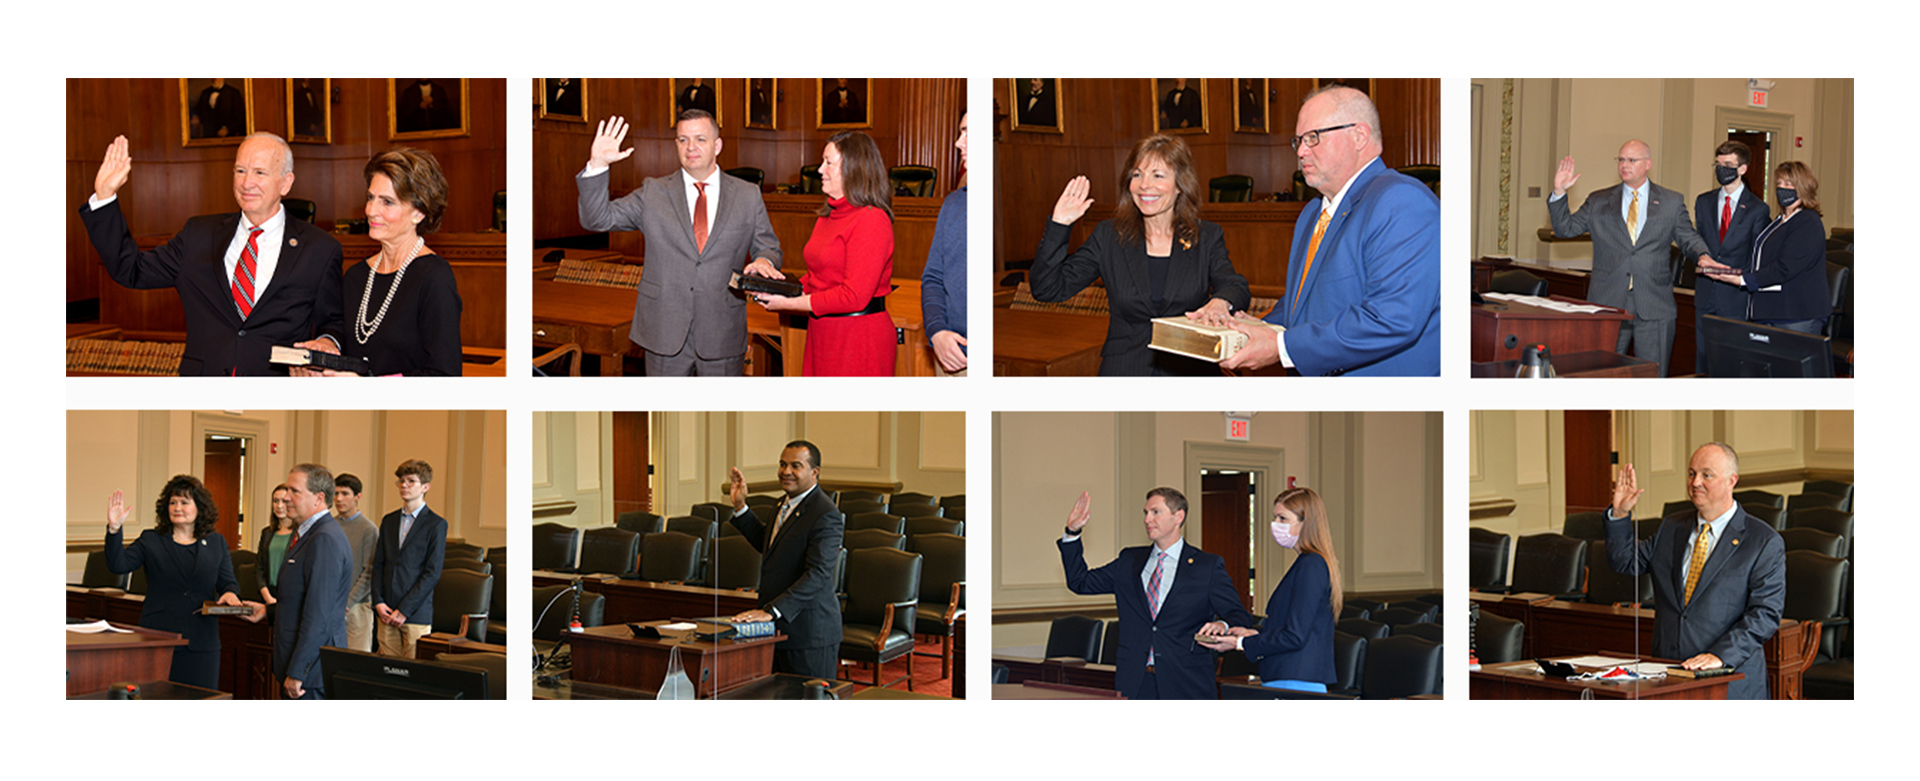 Appellate court judges being sworn-in in 2021